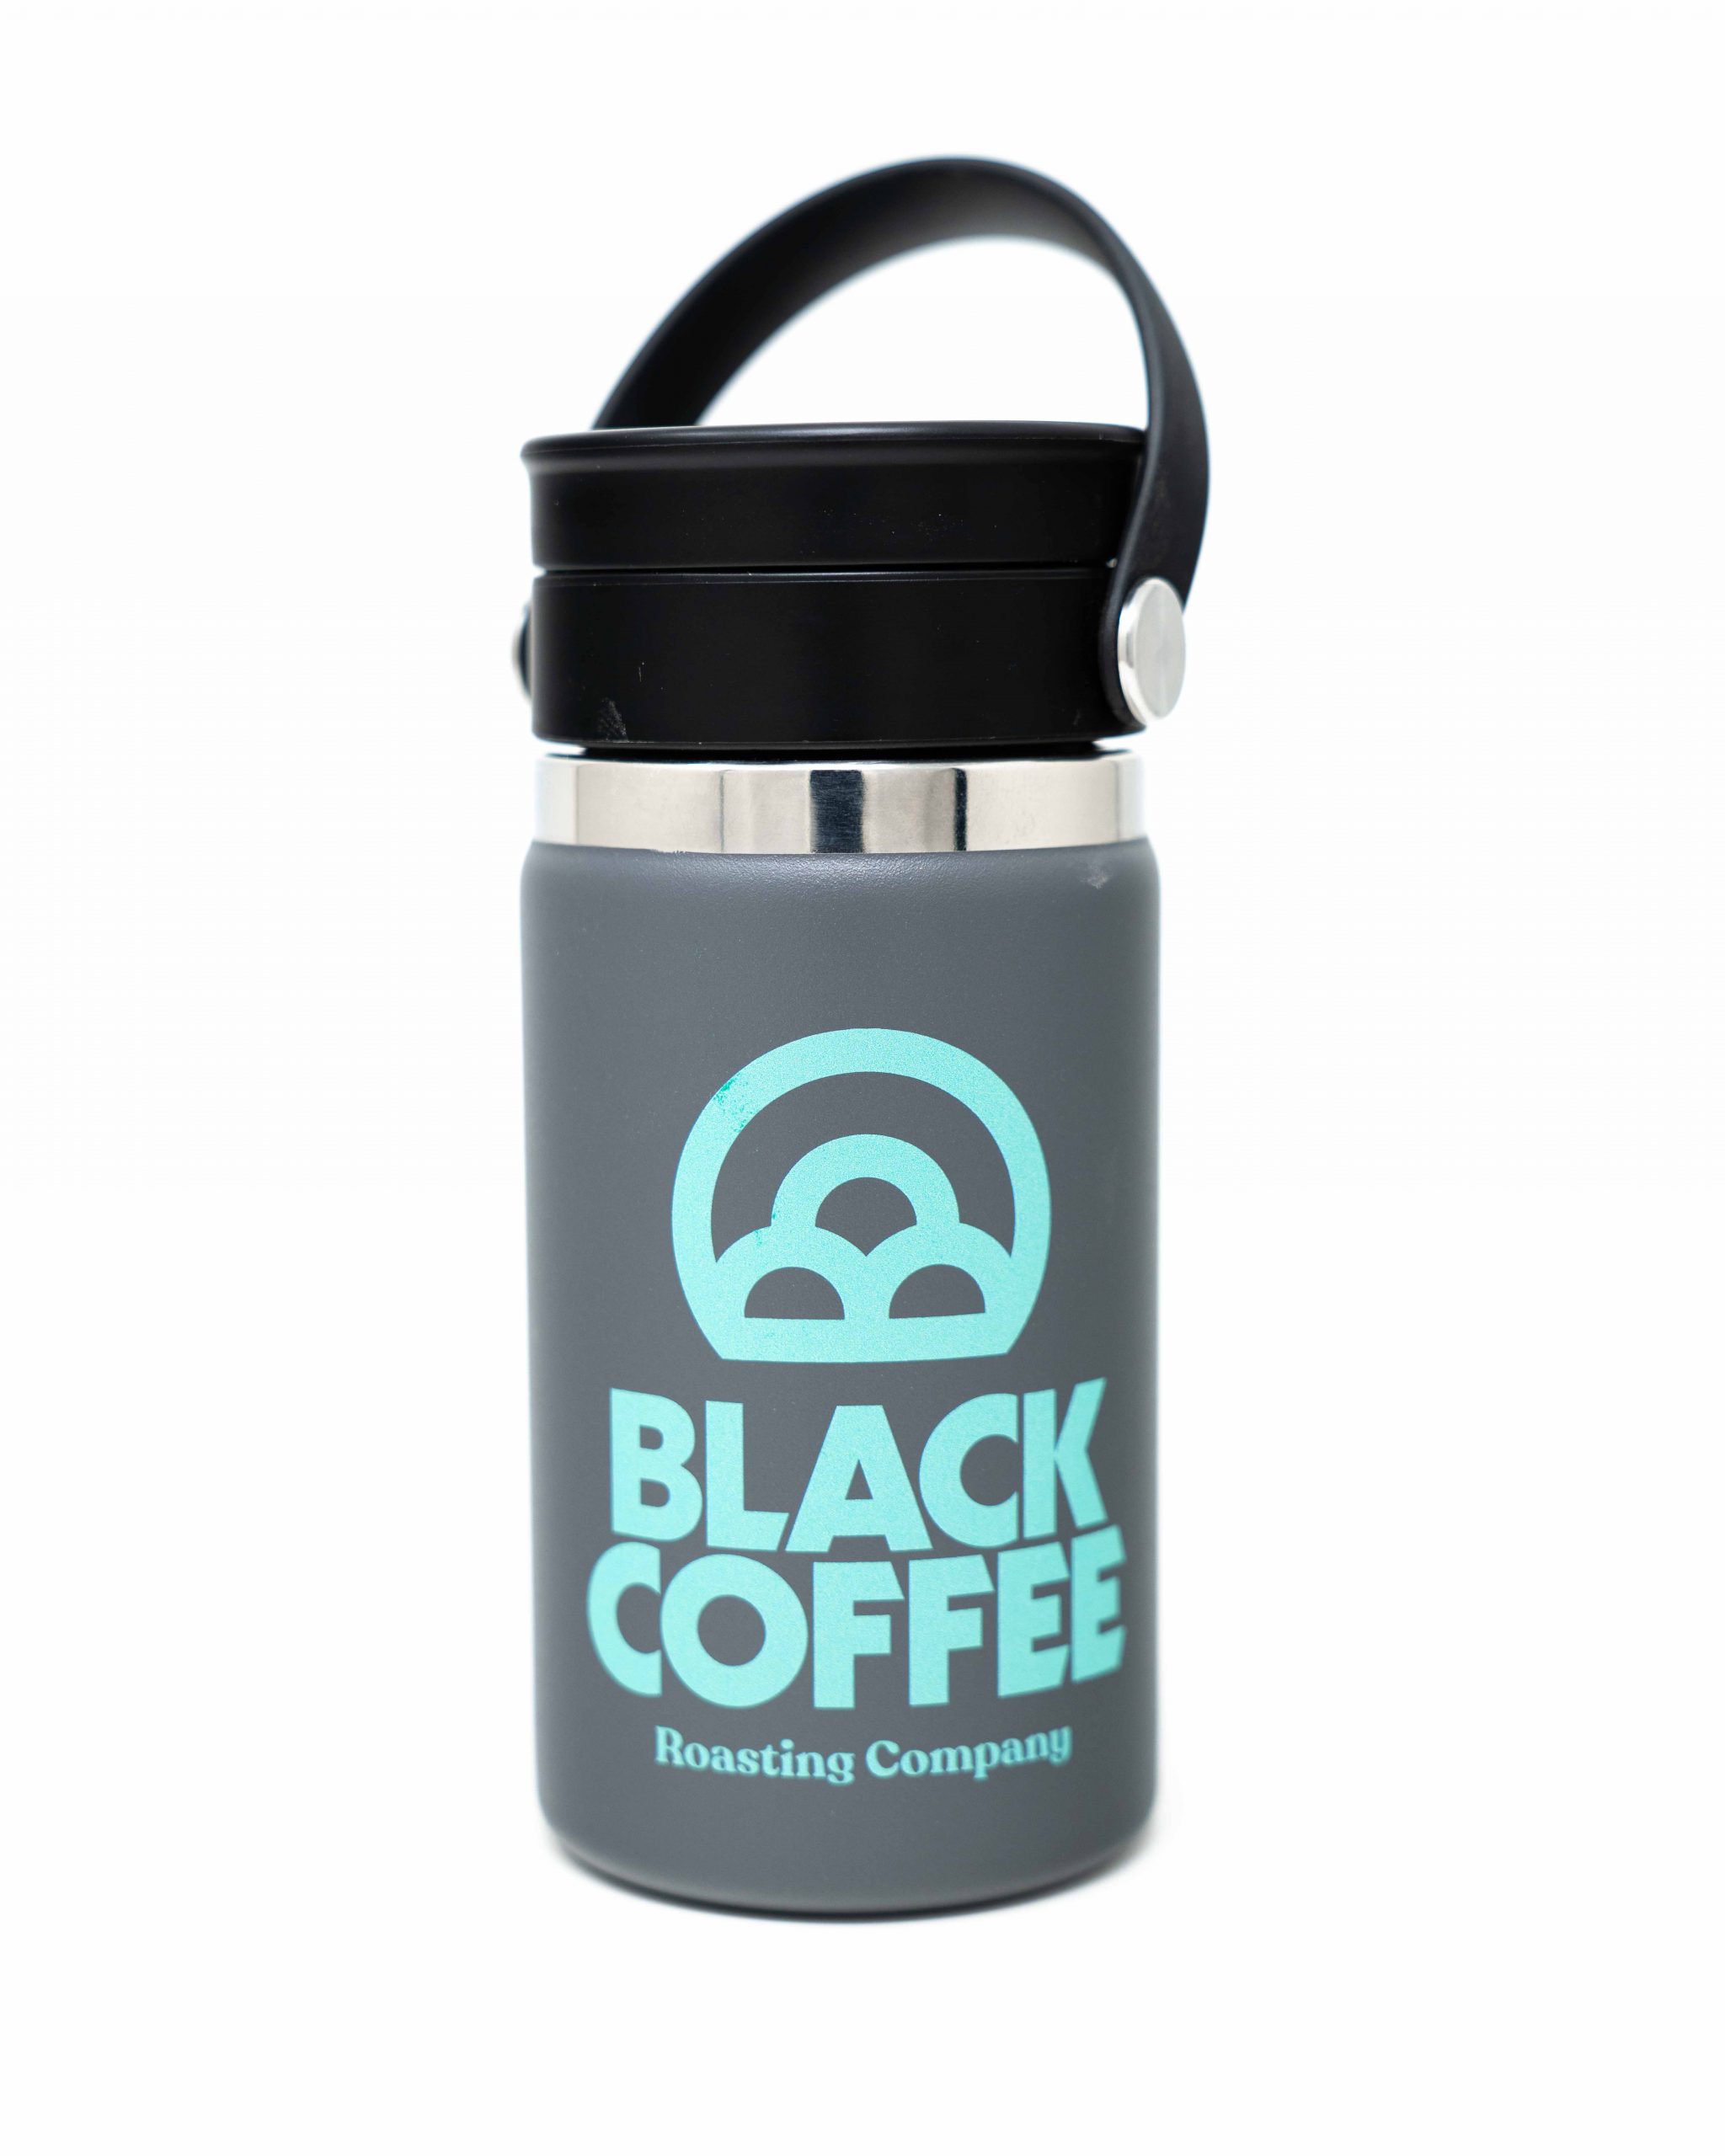 Hydro Flask Insulated 12 oz Mug - Black Coffee Roasting Company